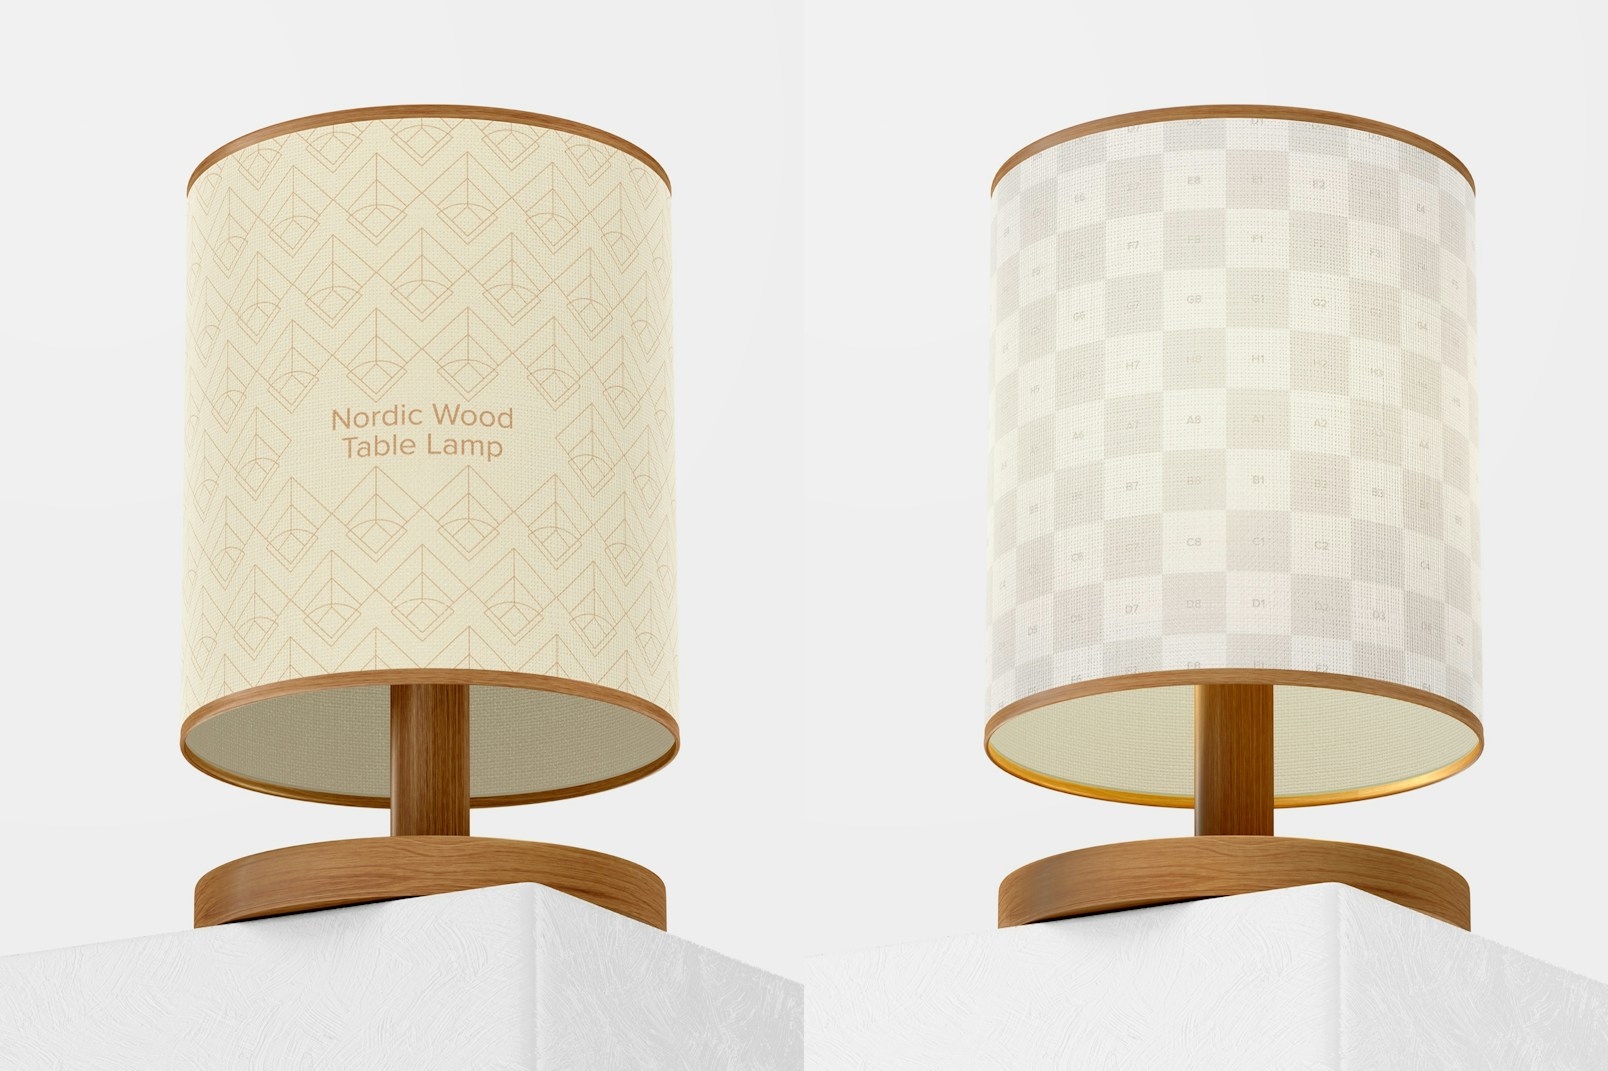 Nordic Wood Table Lamp Mockup, Low Angle View